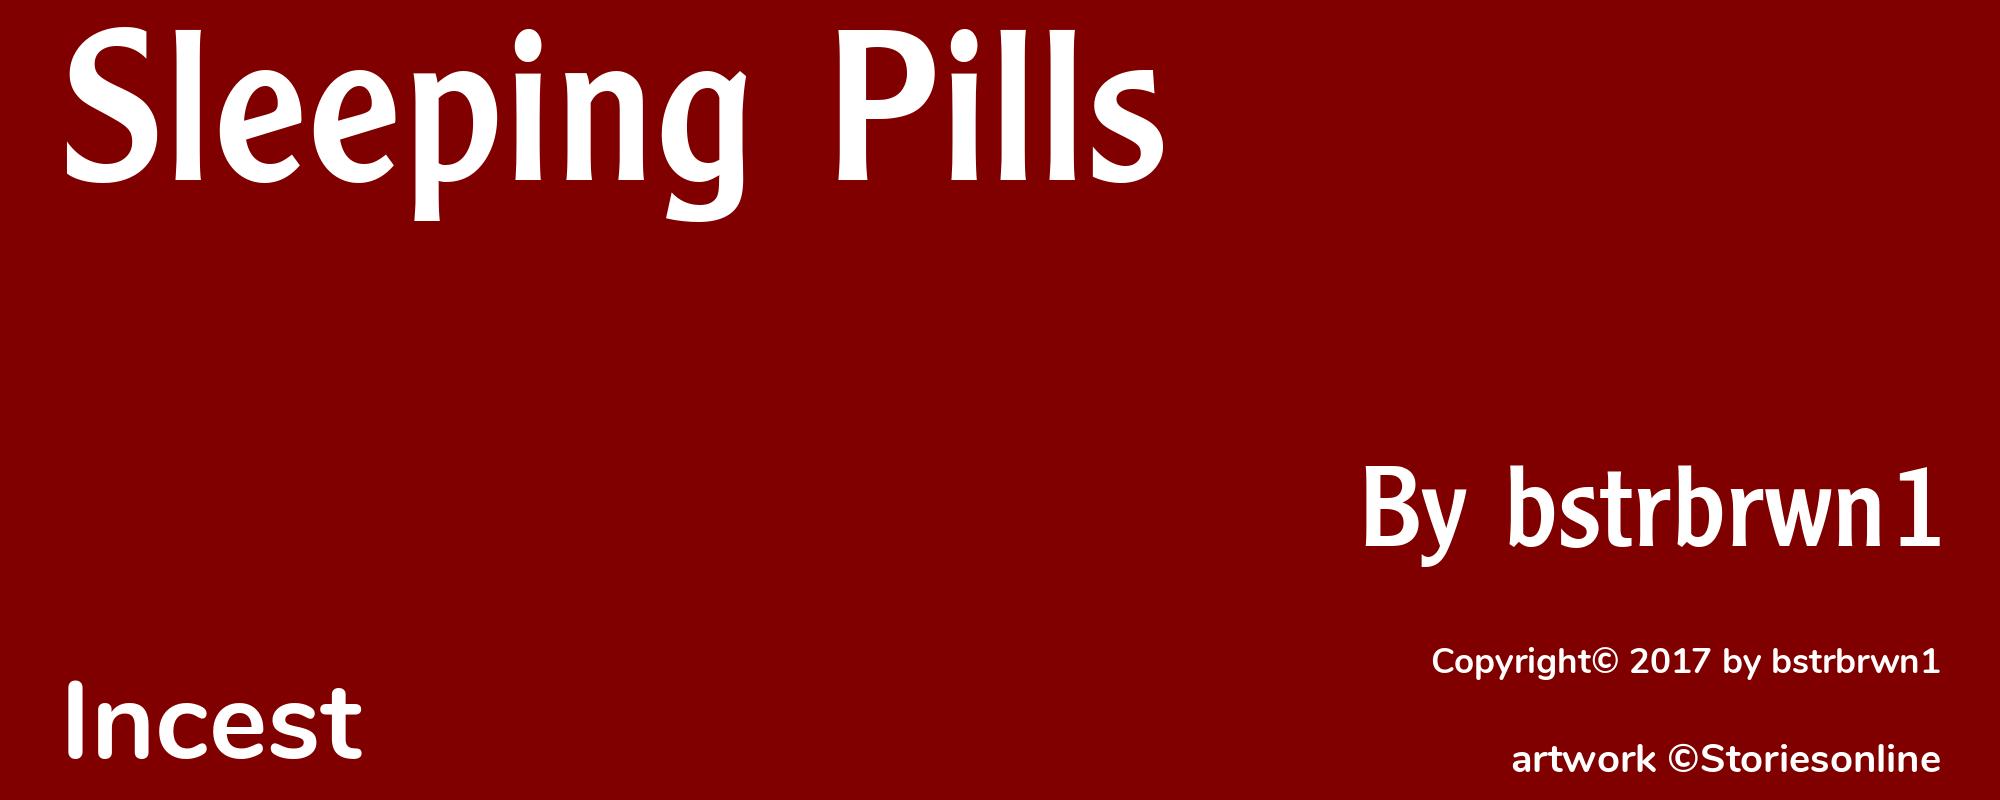 Sleeping Pills - Cover